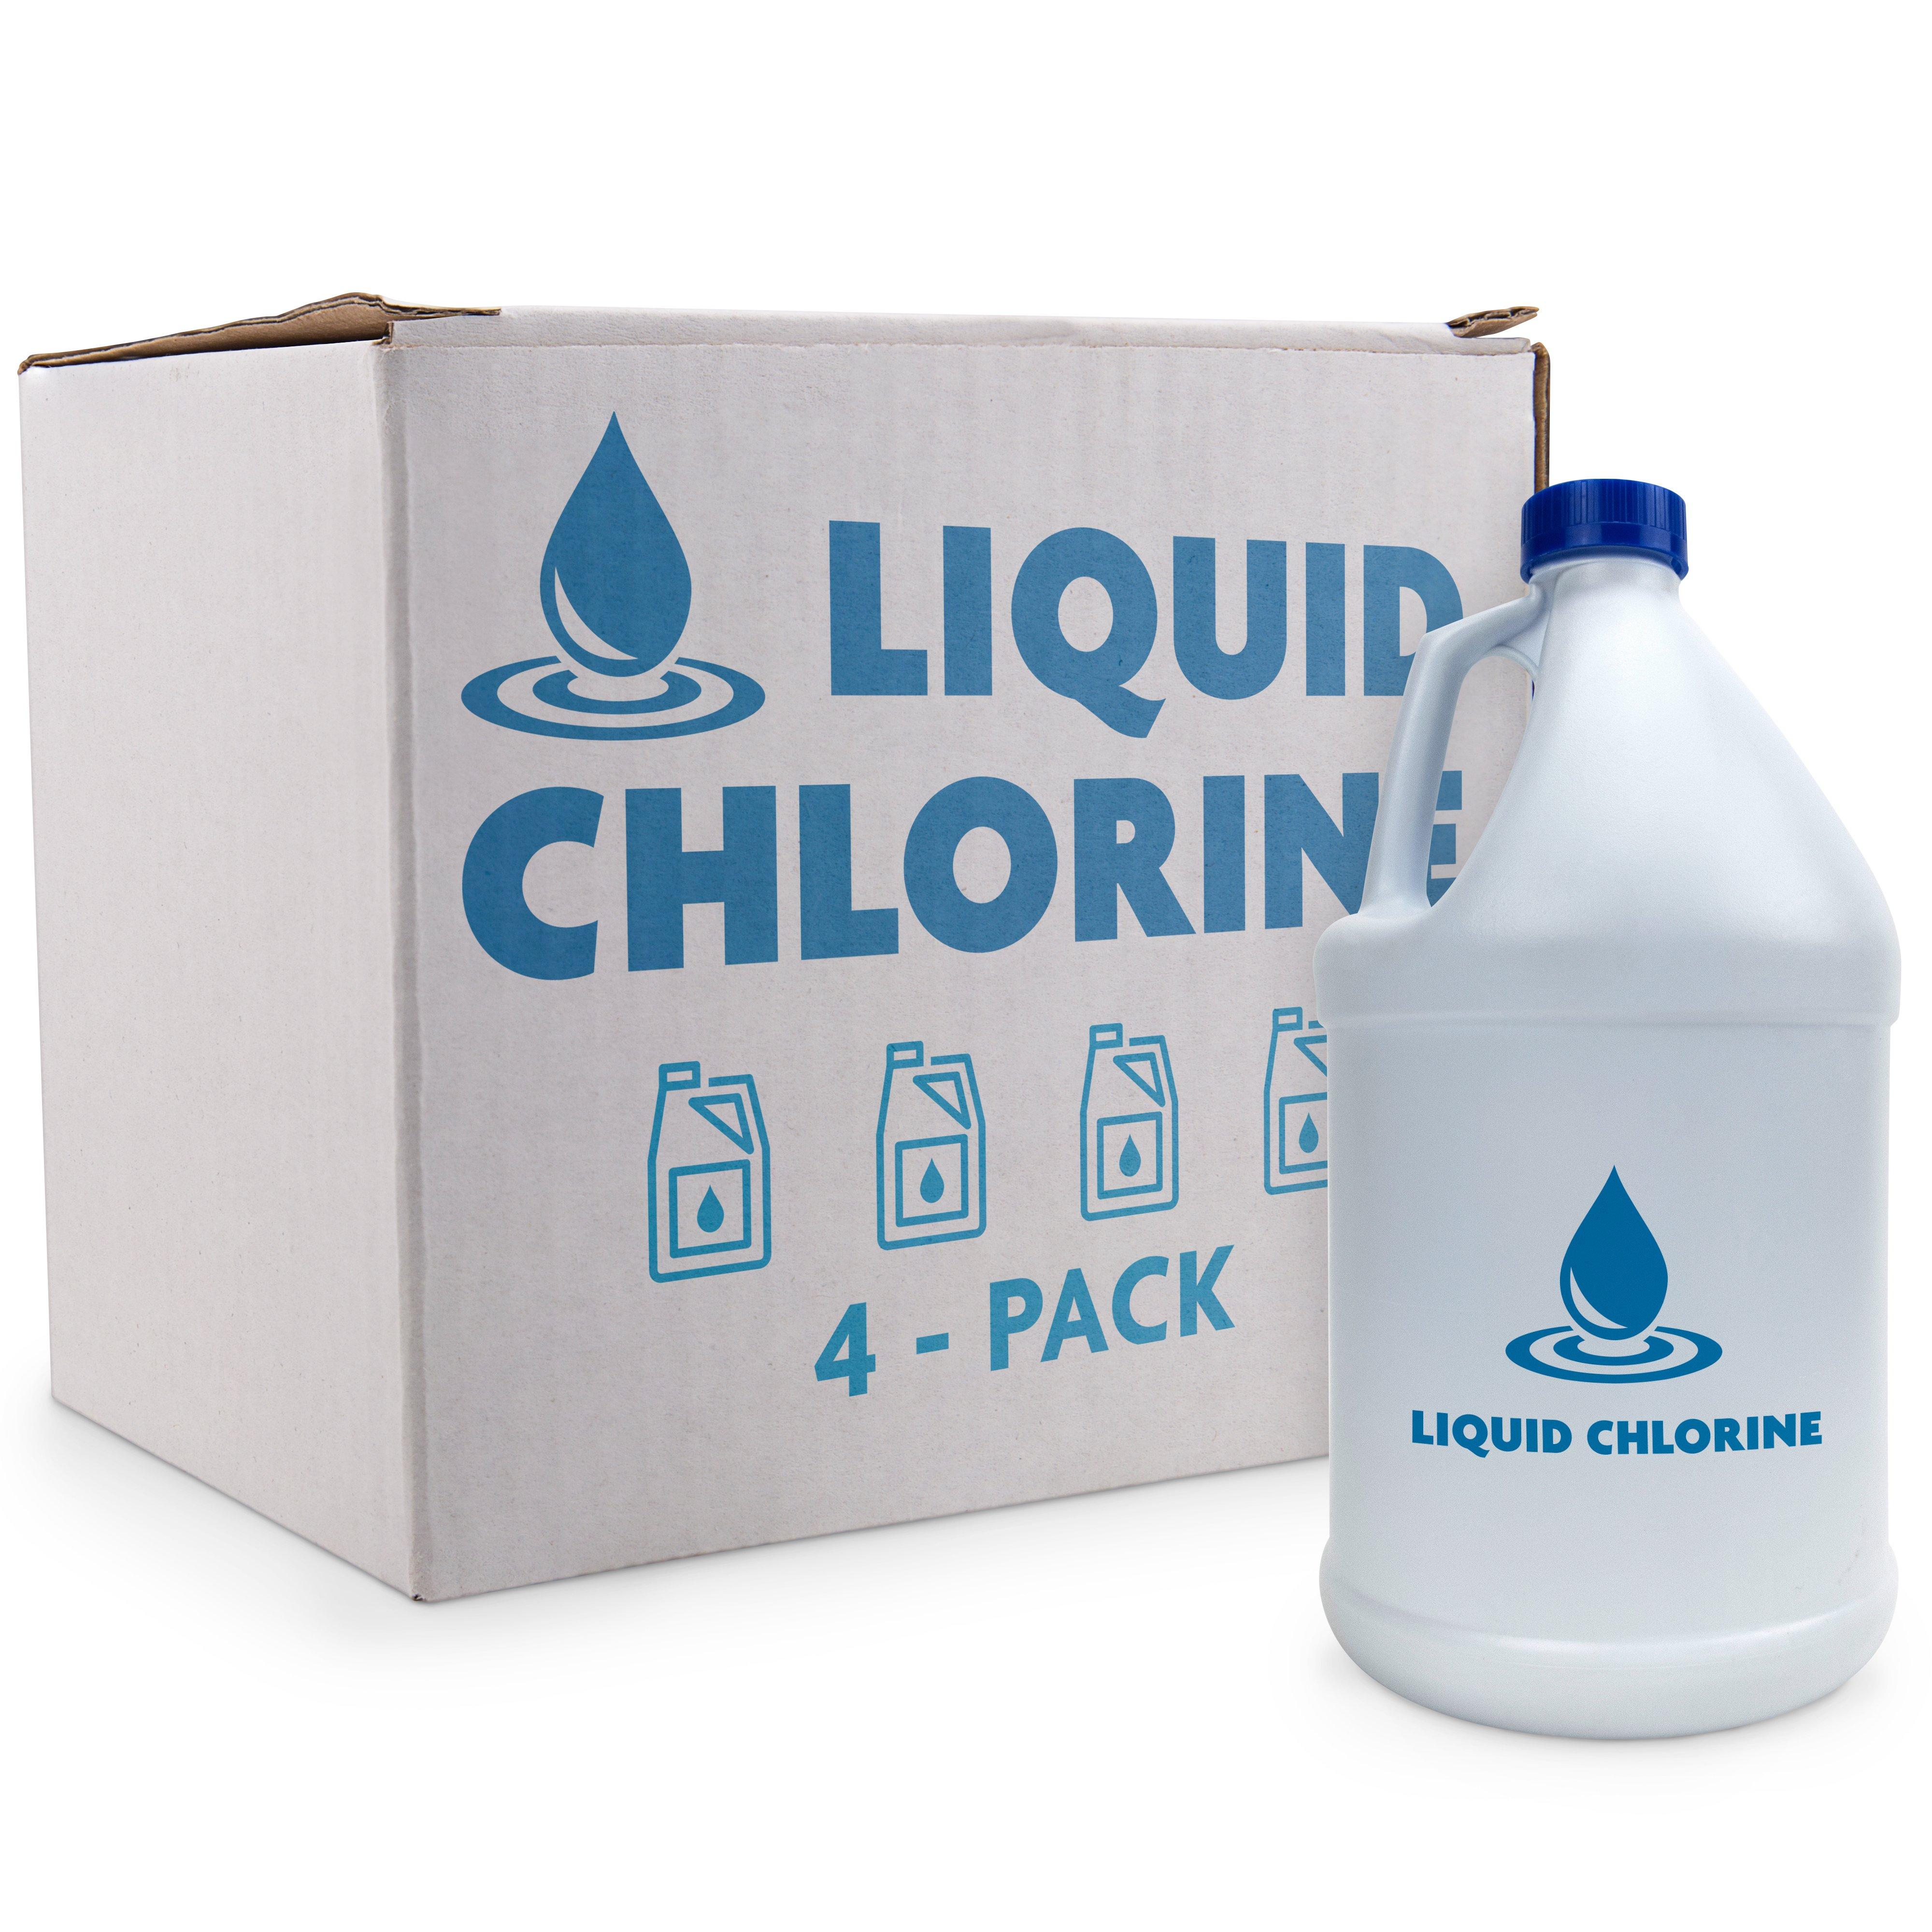 Liquid Chlorine 4-Pack of 1 Gallon Bottles